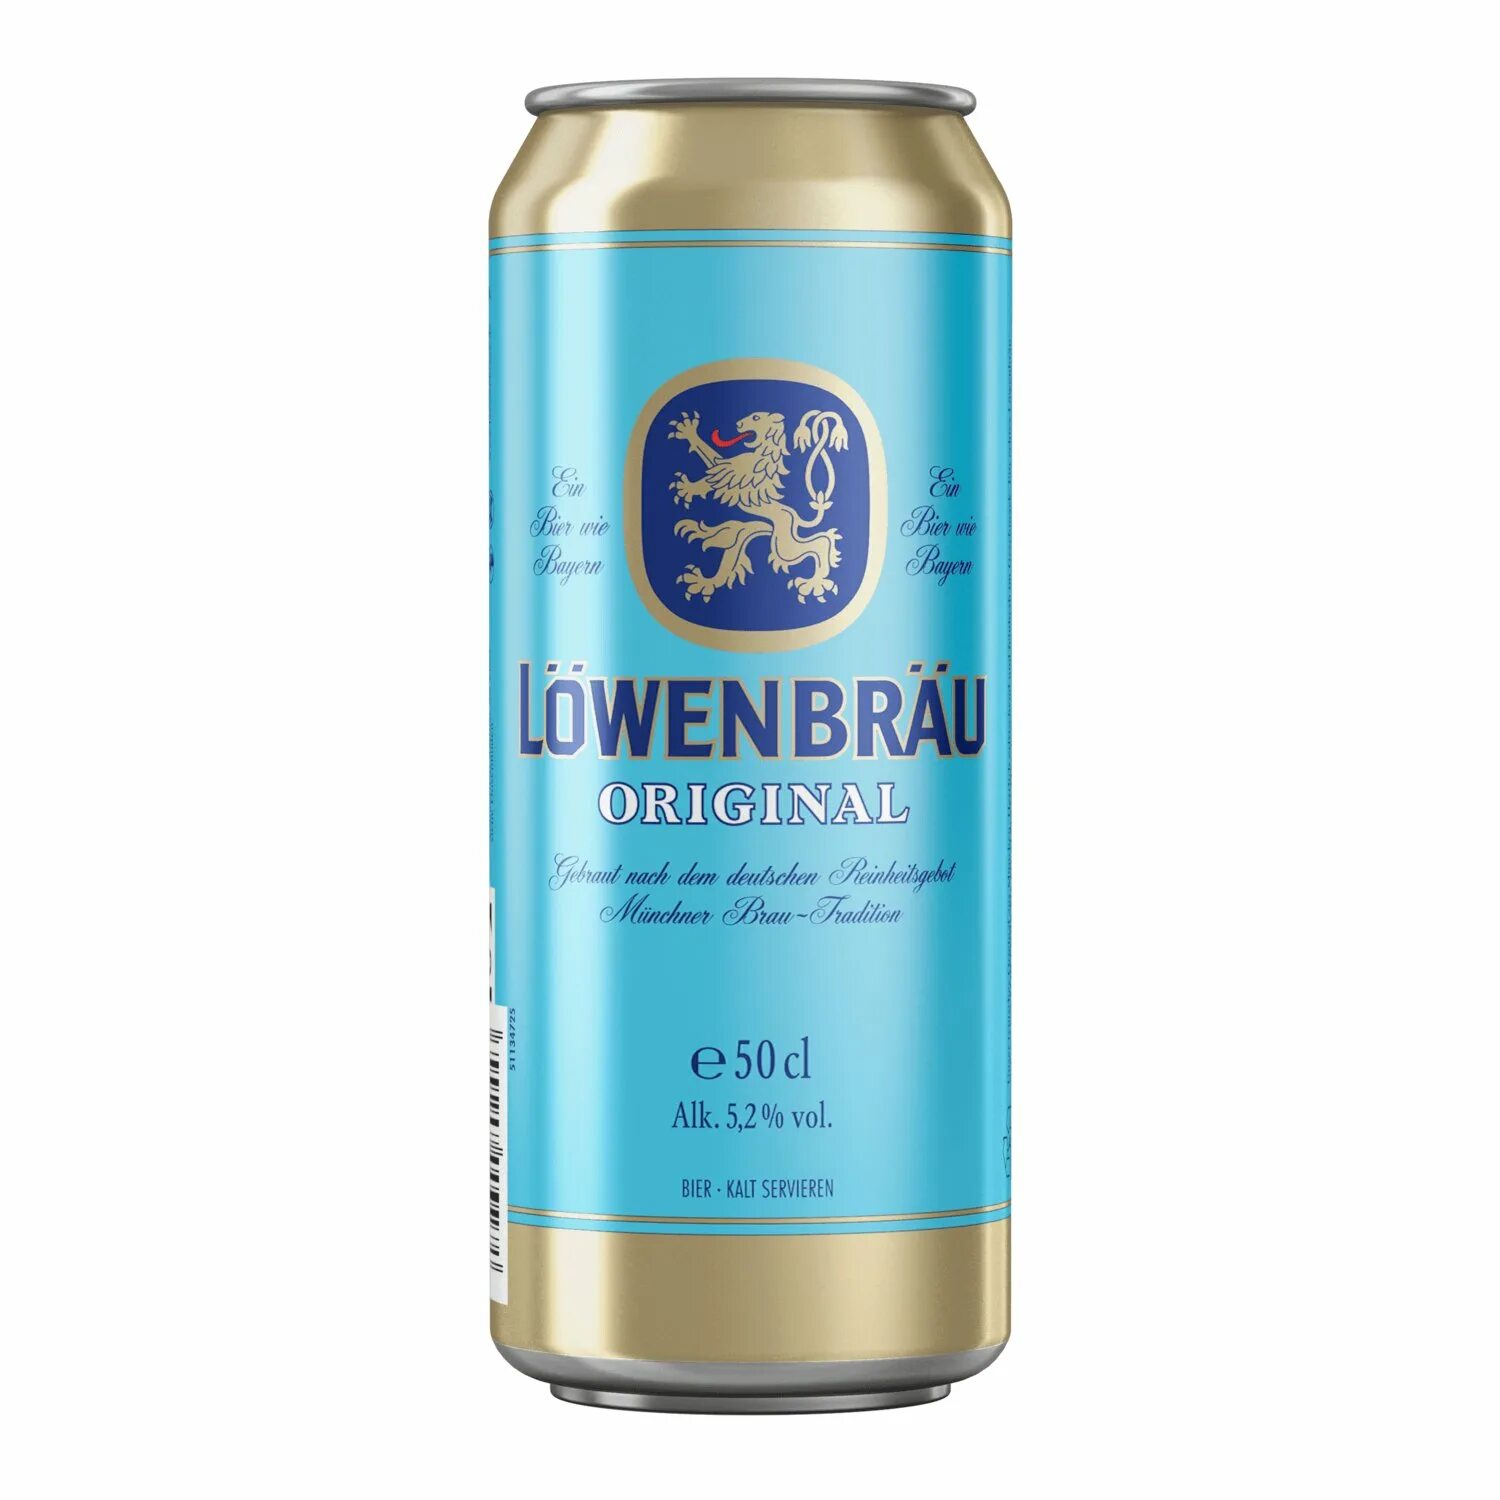 Пиво 0.45 л ж б. Пиво Lowenbrau Original. Левенбраун пиво 0.5 крепость. Пиво Ловенбрау Оригинальное ж б 0.45. Пиво Ловенбрау оригинал 0.45л.